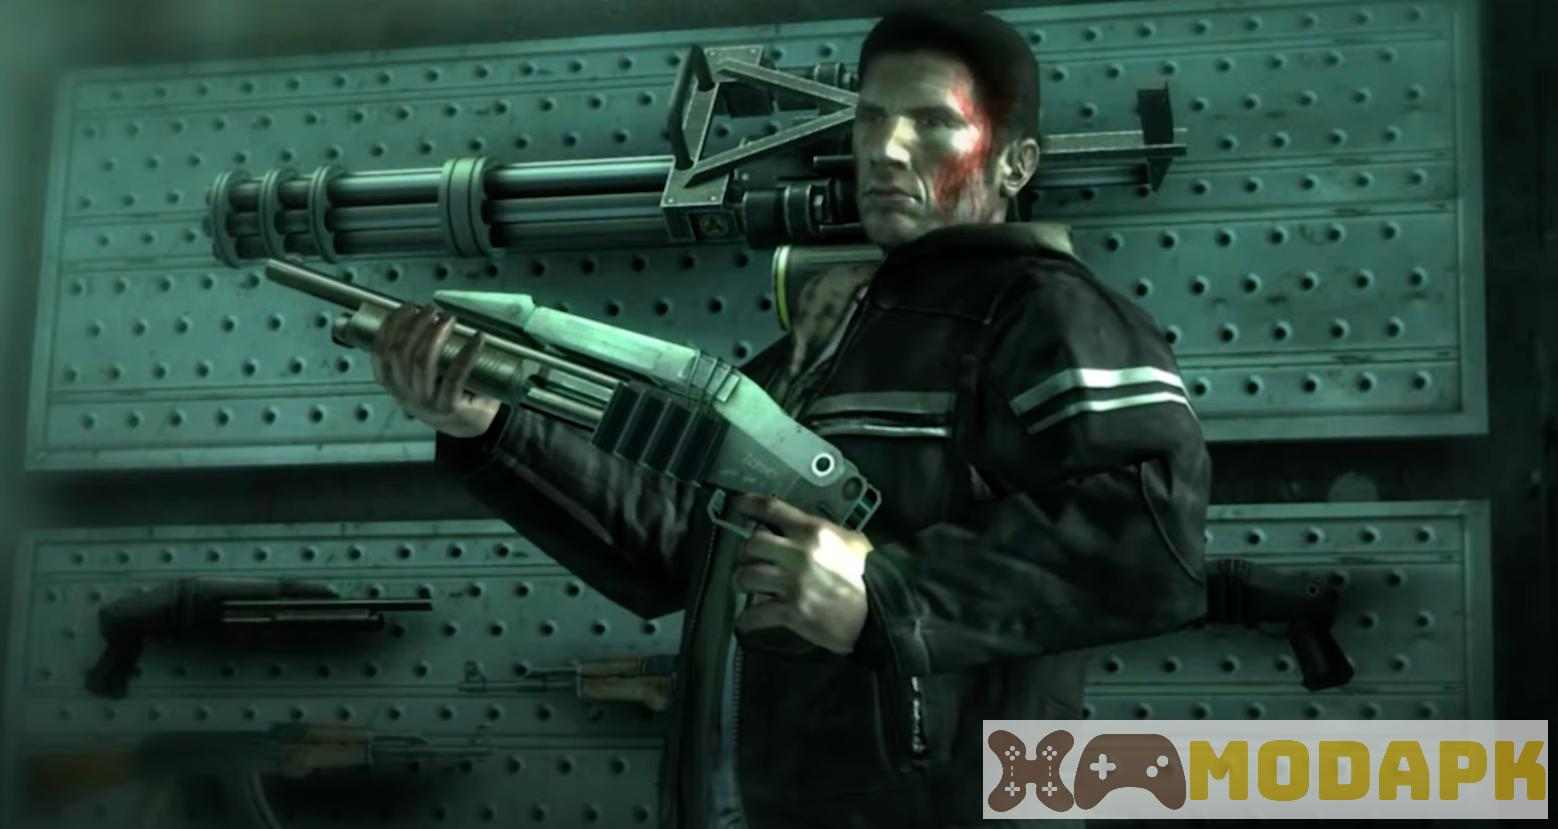 Dead Trigger: Survival Shooter APK MOD 2.1.5 (Menu Pro, Infinite Money, Full Gold, Full Ammo, All Weapons)